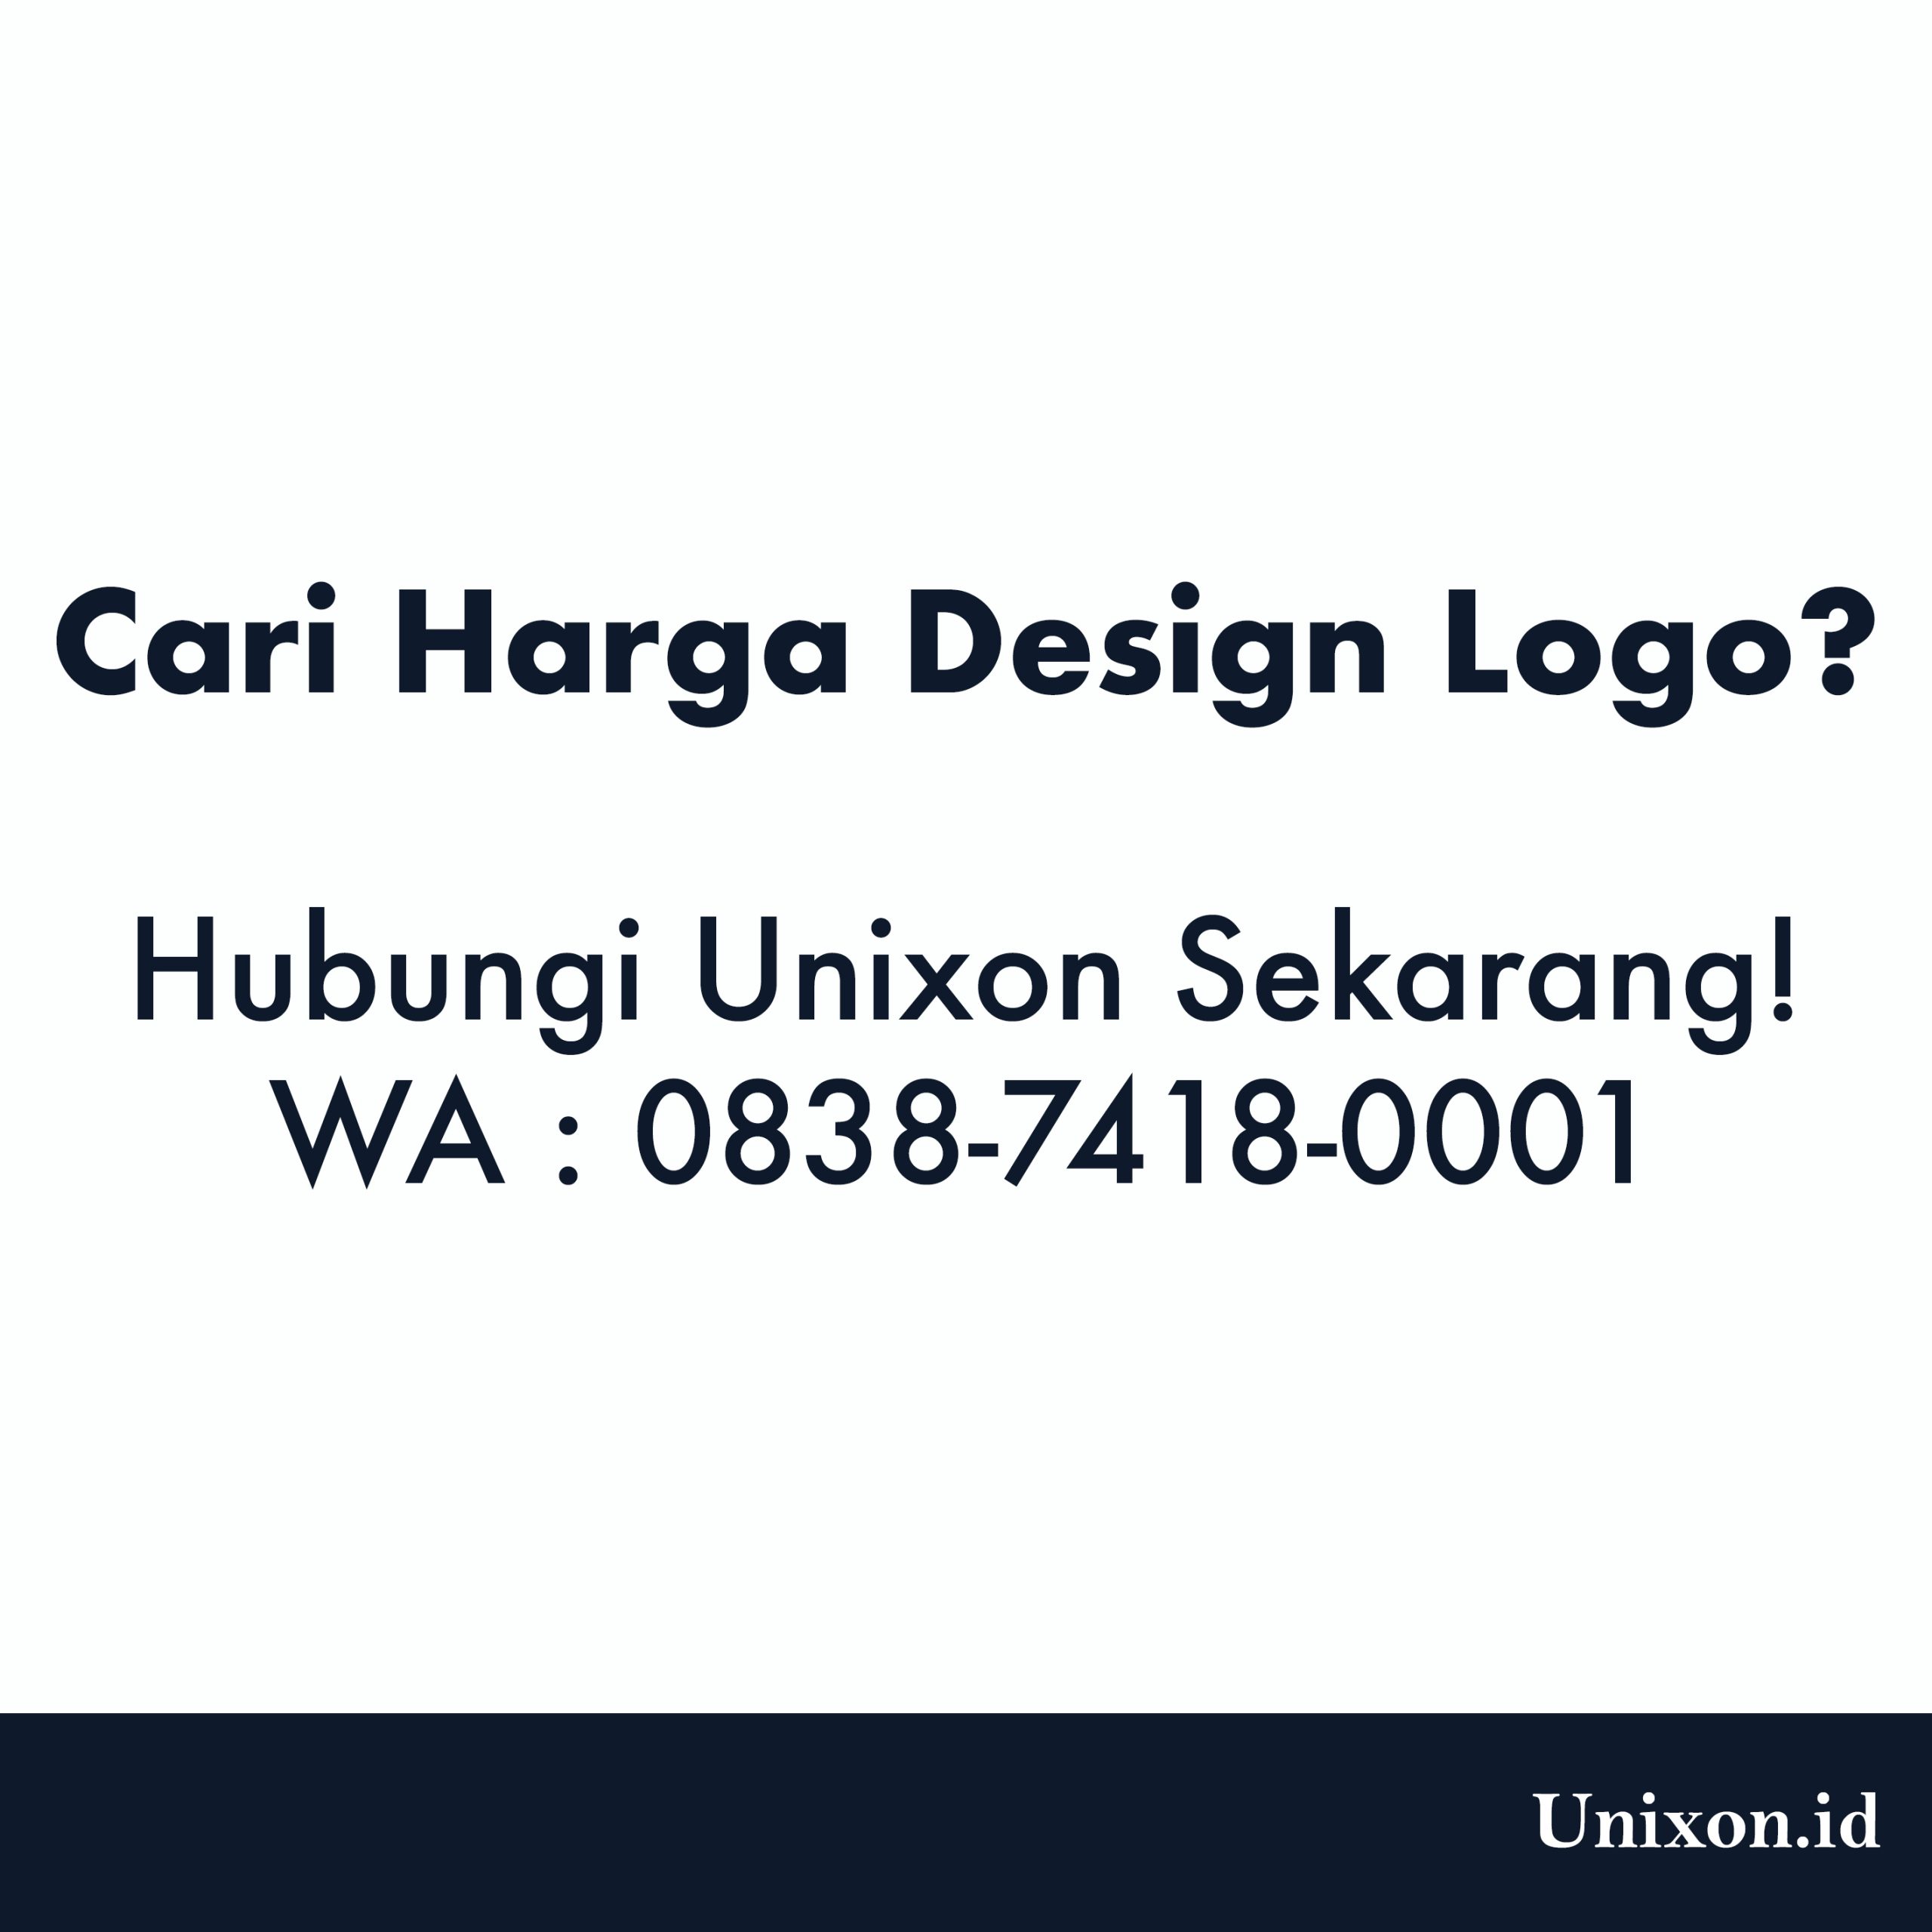 Harga Design Logo